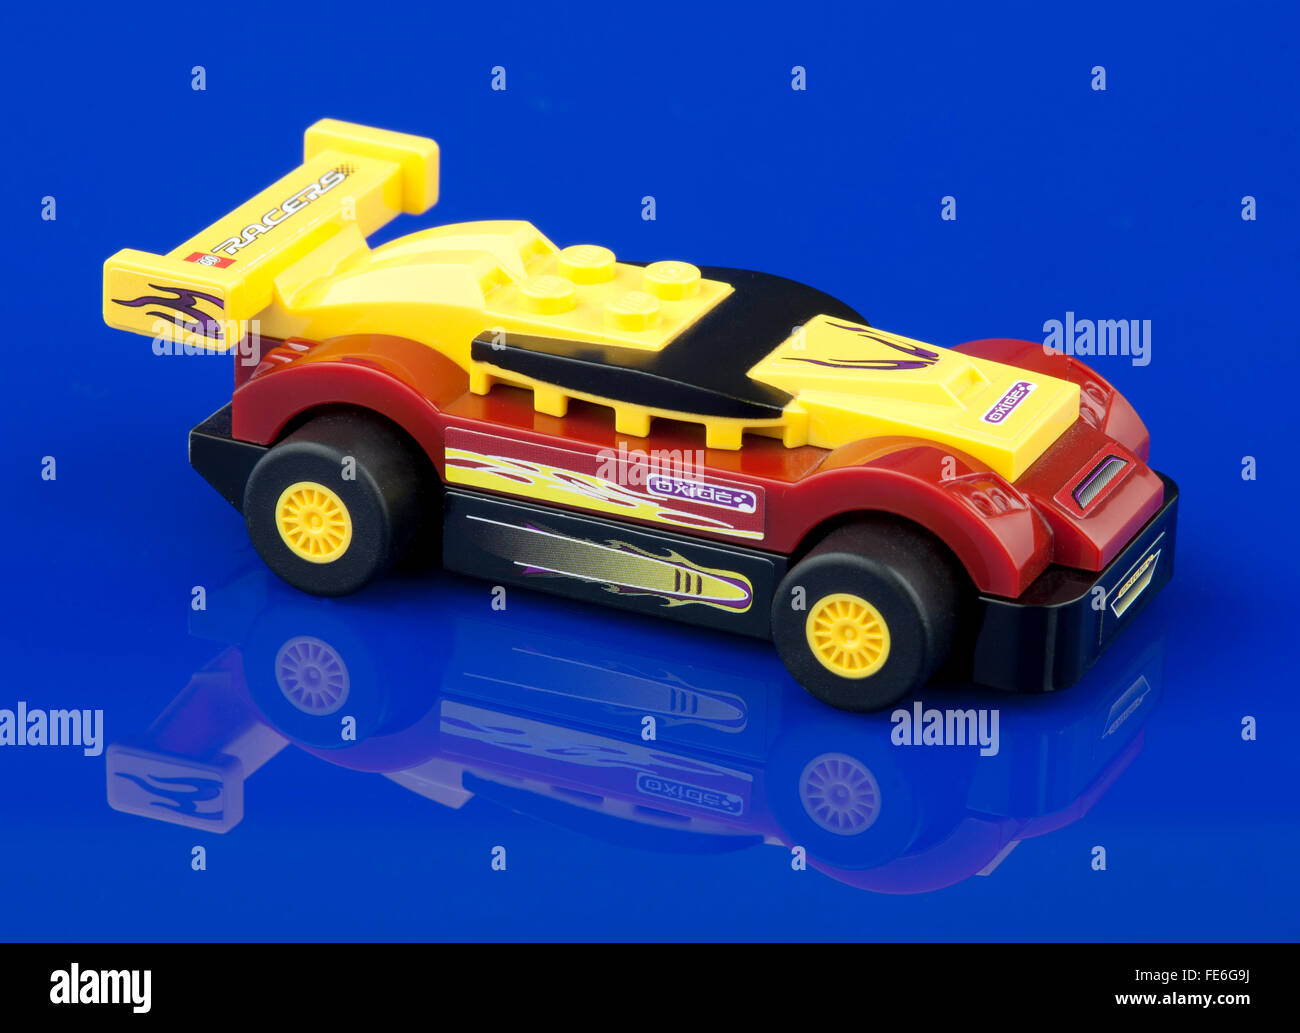 Lego racer toy car on blue background Stock Photo